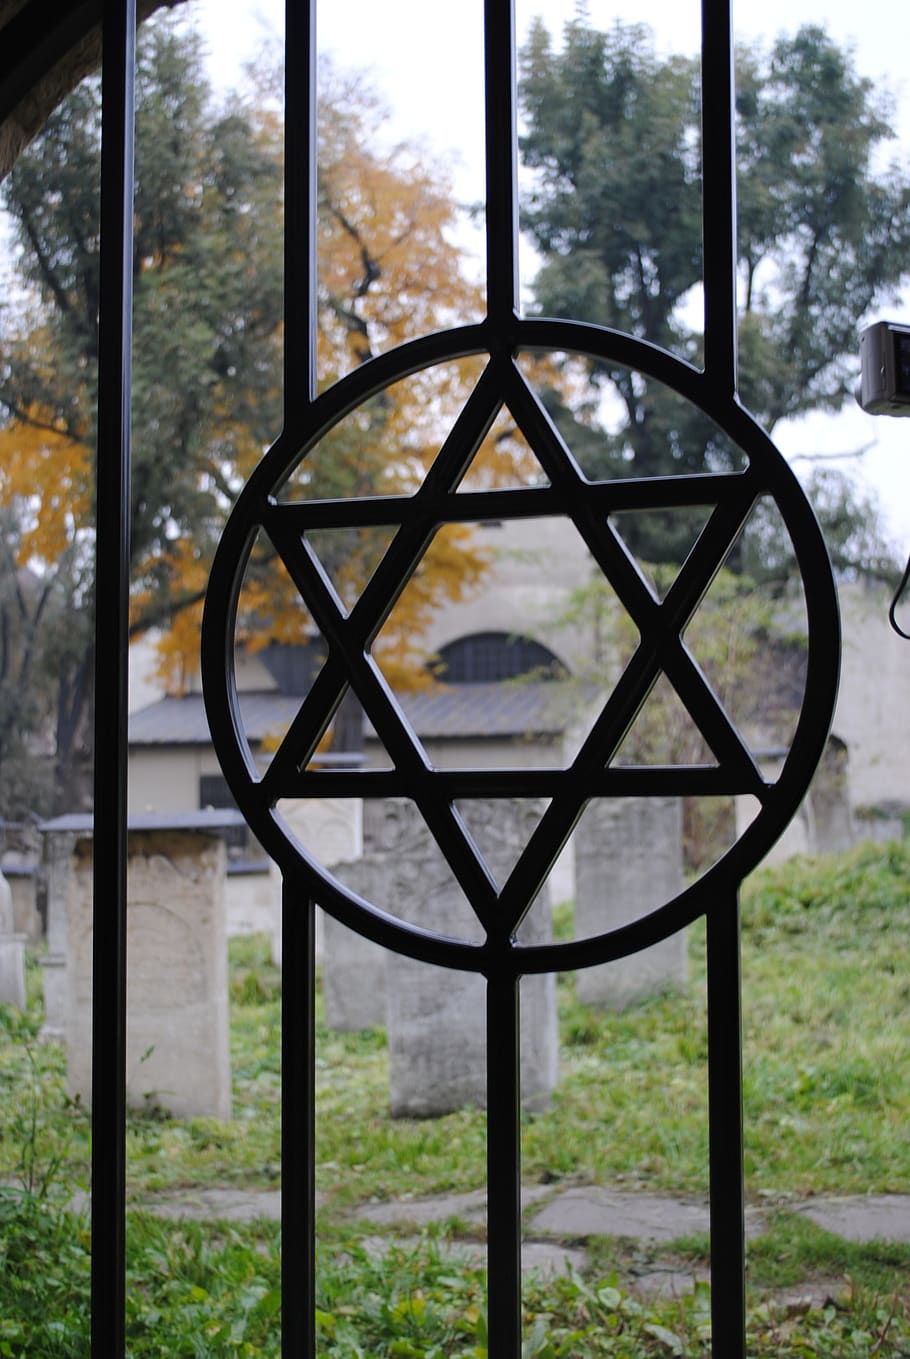 cemitério, judeu, memorial, cemitério judaico, estrela de david, janela, dia, vidro, material, metal